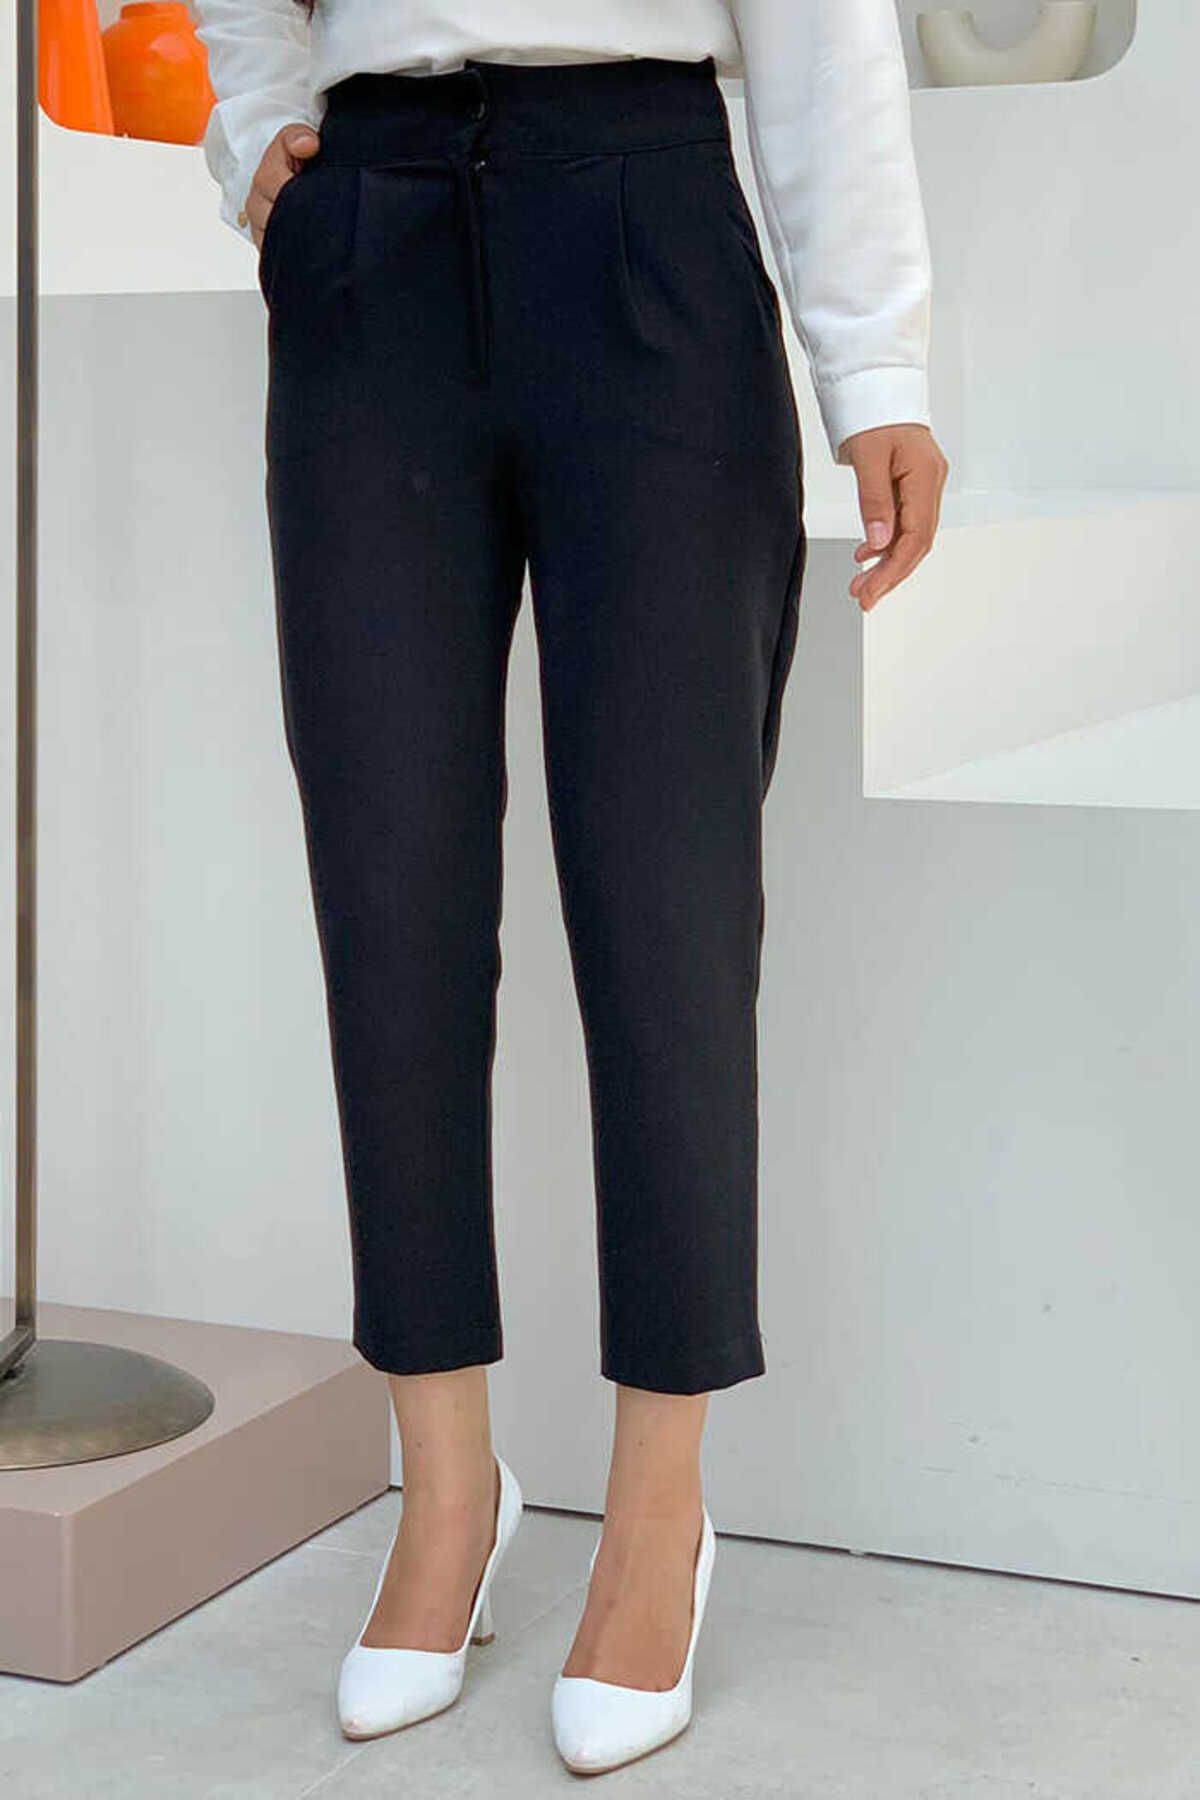 Bym Fashion Büyük Beden Fermuarlı Cep Detaylı Kalem Pantolon 0201-1 Siyah